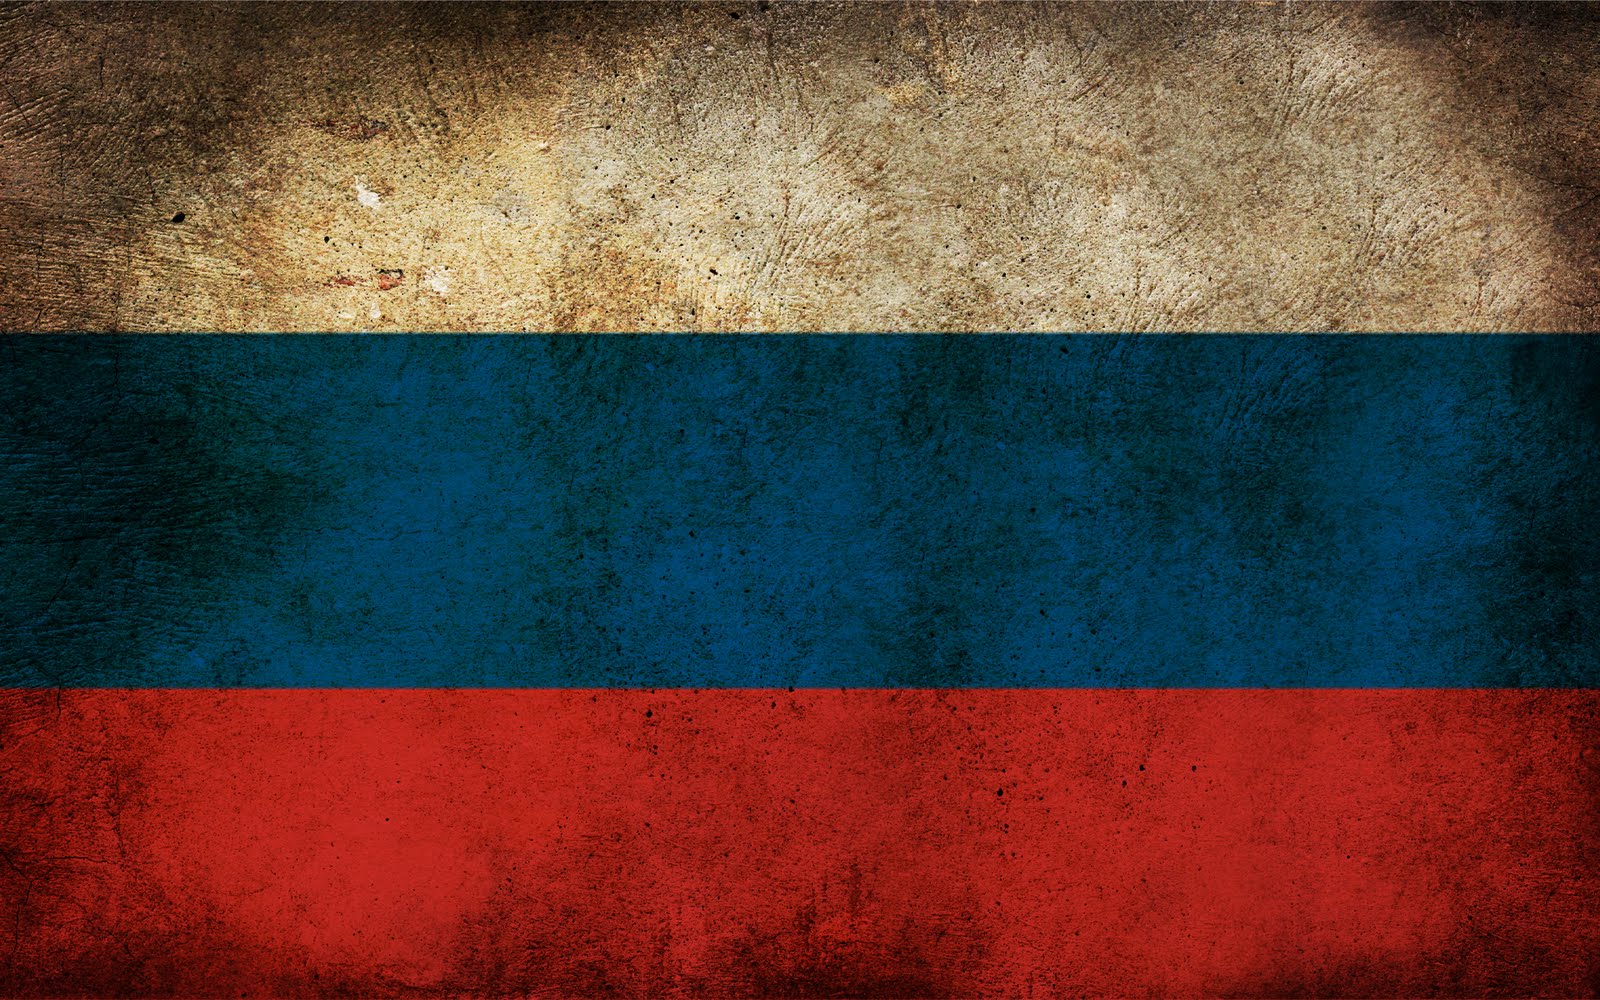 http://1.bp.blogspot.com/-lTpG5-Q3owA/TcWhS4nsb_I/AAAAAAAAAmU/Xm-AsXWRgq8/s1600/Flag+Wallpaper+of+Russia+%25281%2529.jpg